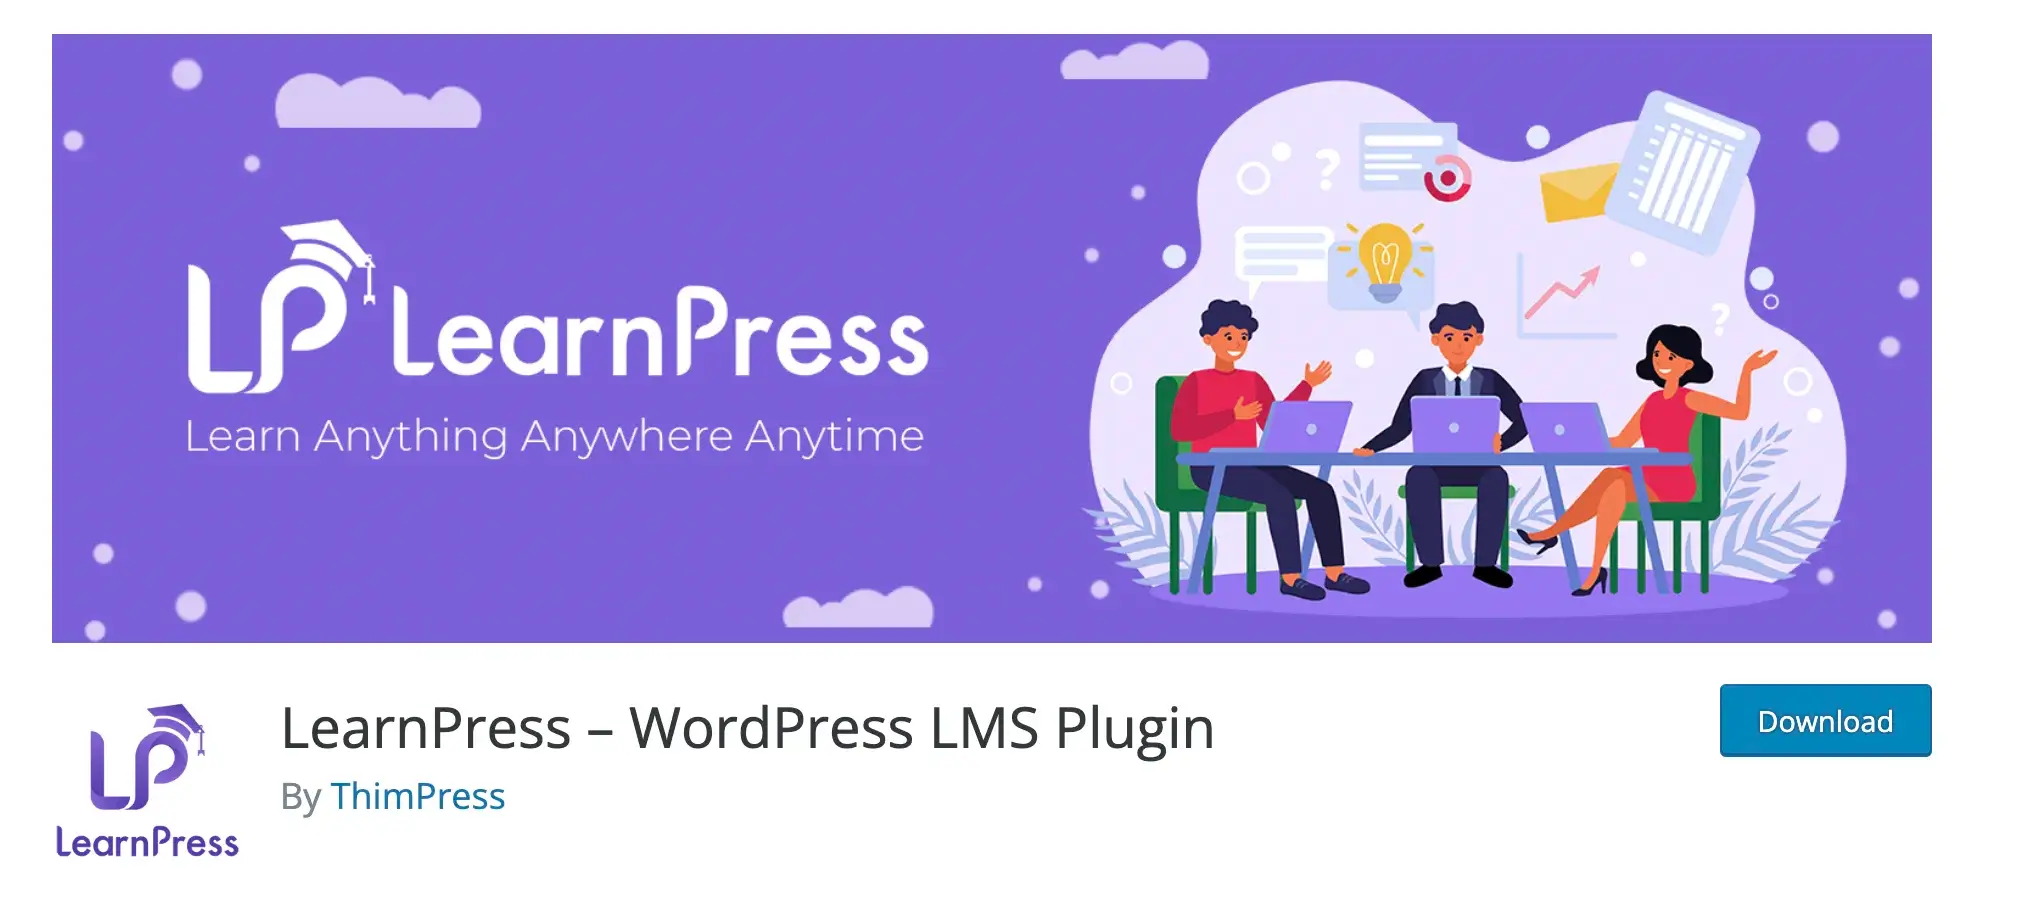 A screenshot of LearnPress' plugin on WordPress by ThimPress